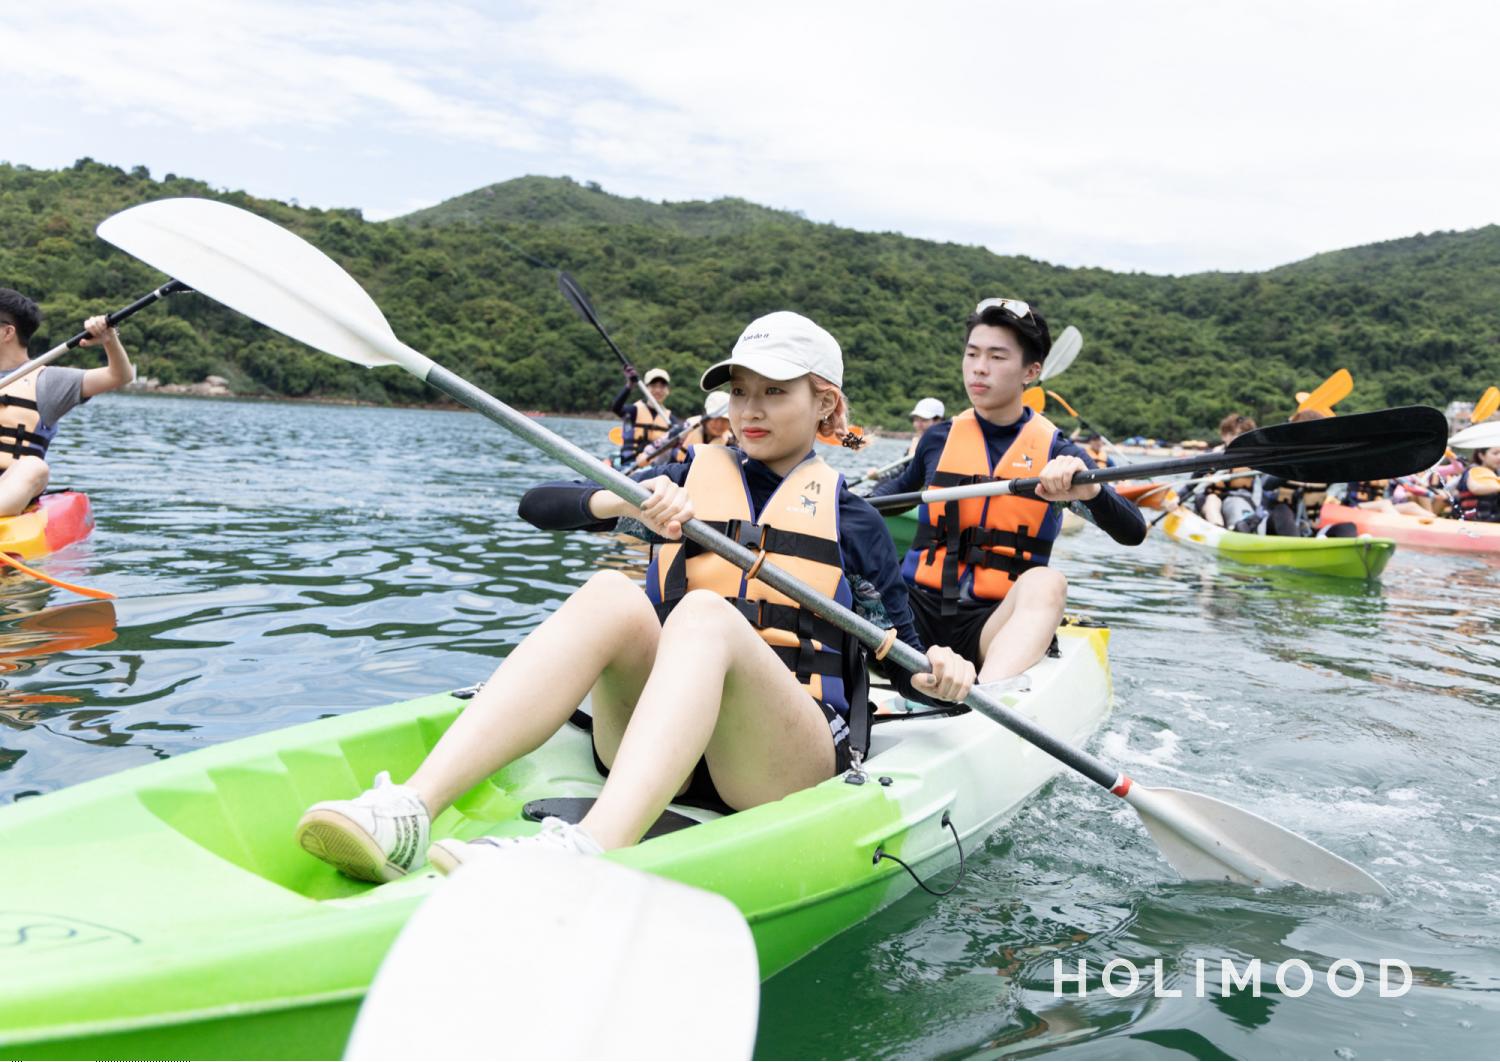 Explorer Hong Kong 【Sai Kung】Kayak & Snorkelling Experience - coach included 2